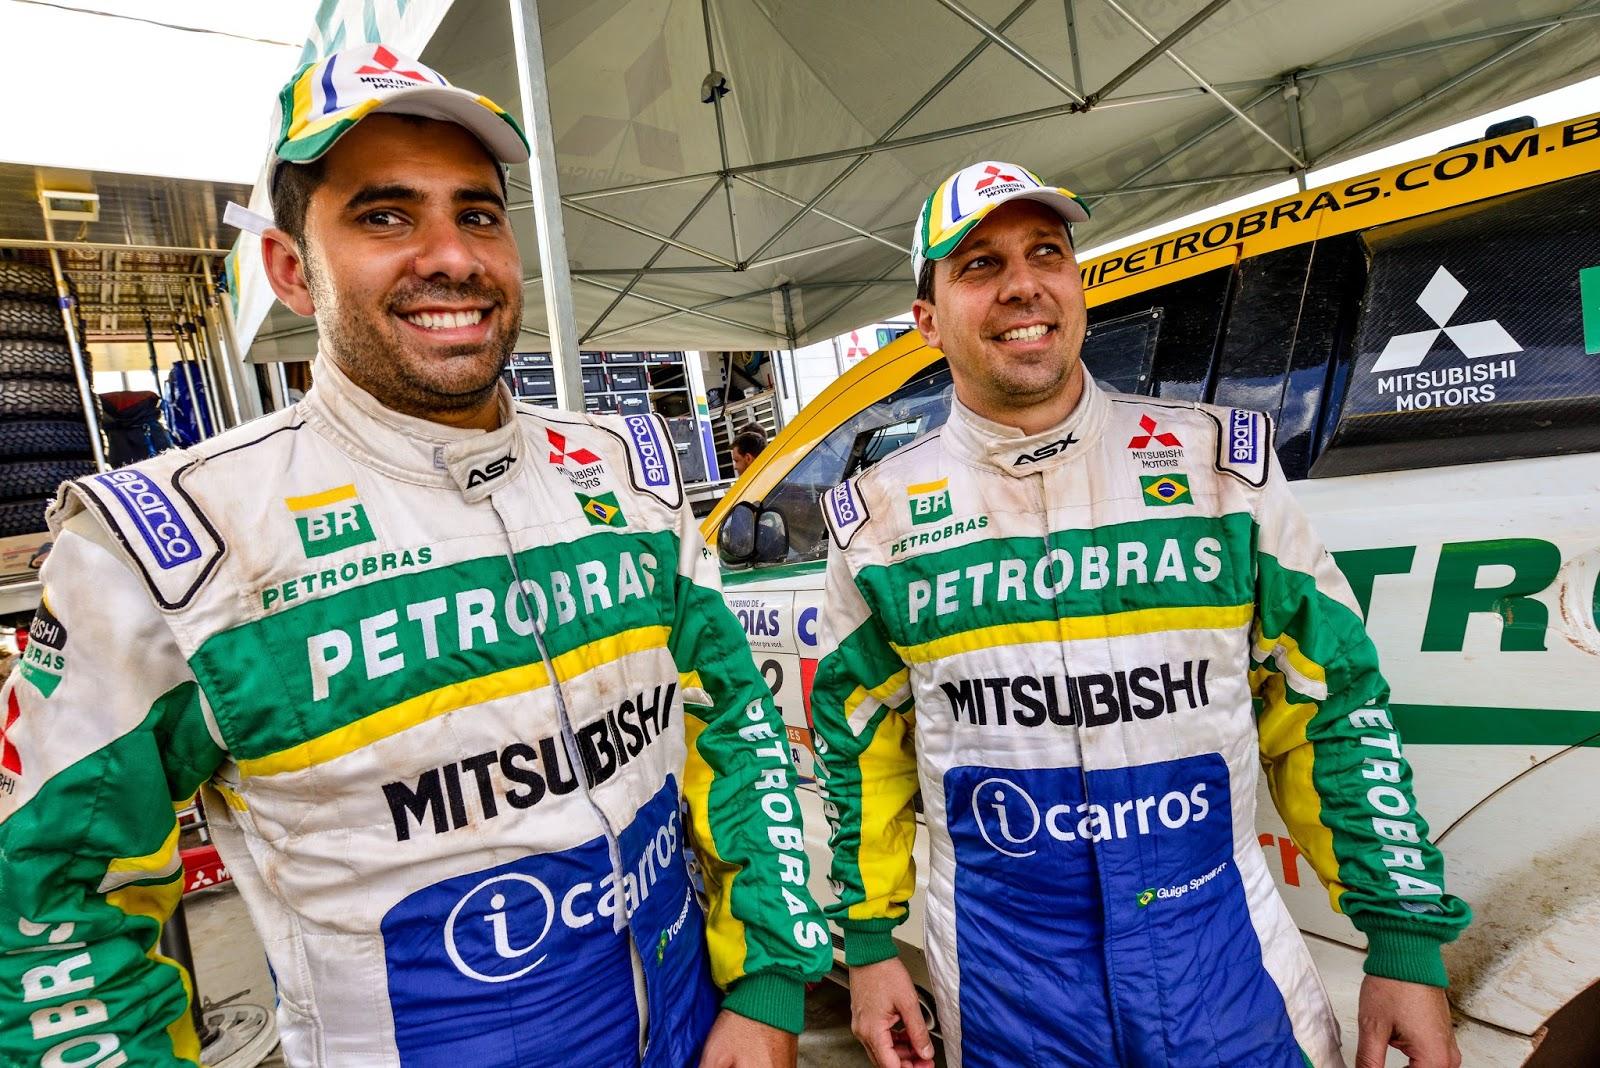 Dupla da Equipe Mitsubishi Petrobras o navegador Youssef Haddad e o piloto Guilherme Spinelli